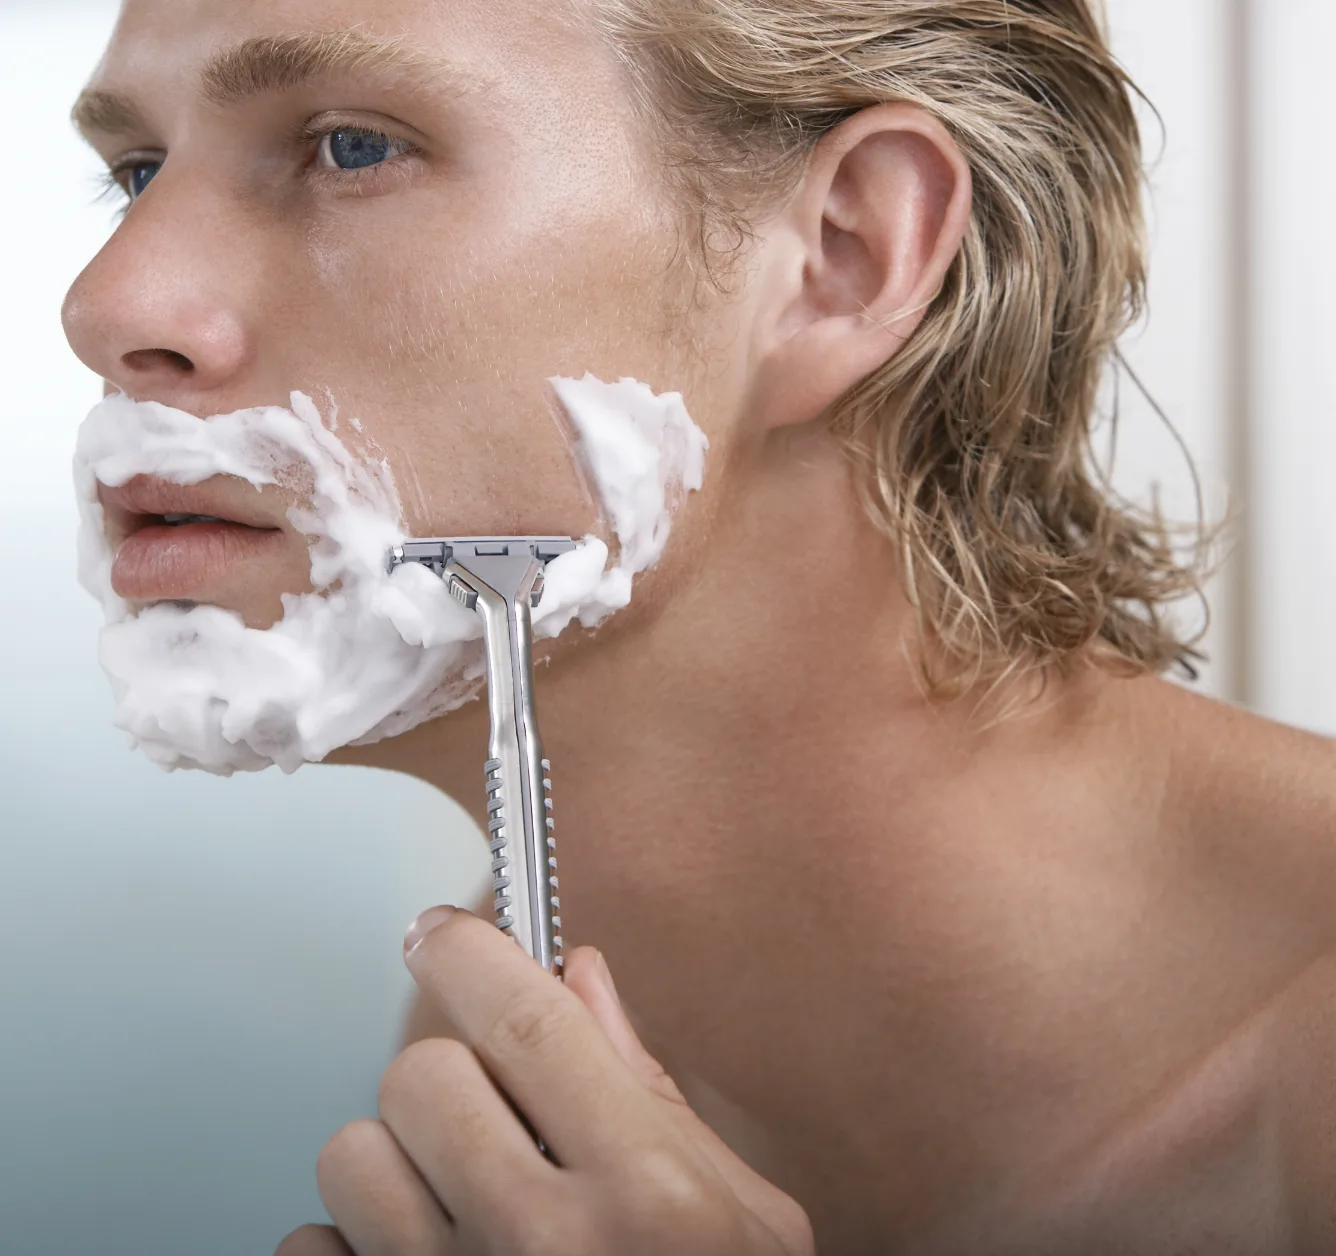 Sharp Edge fornece barbear rente